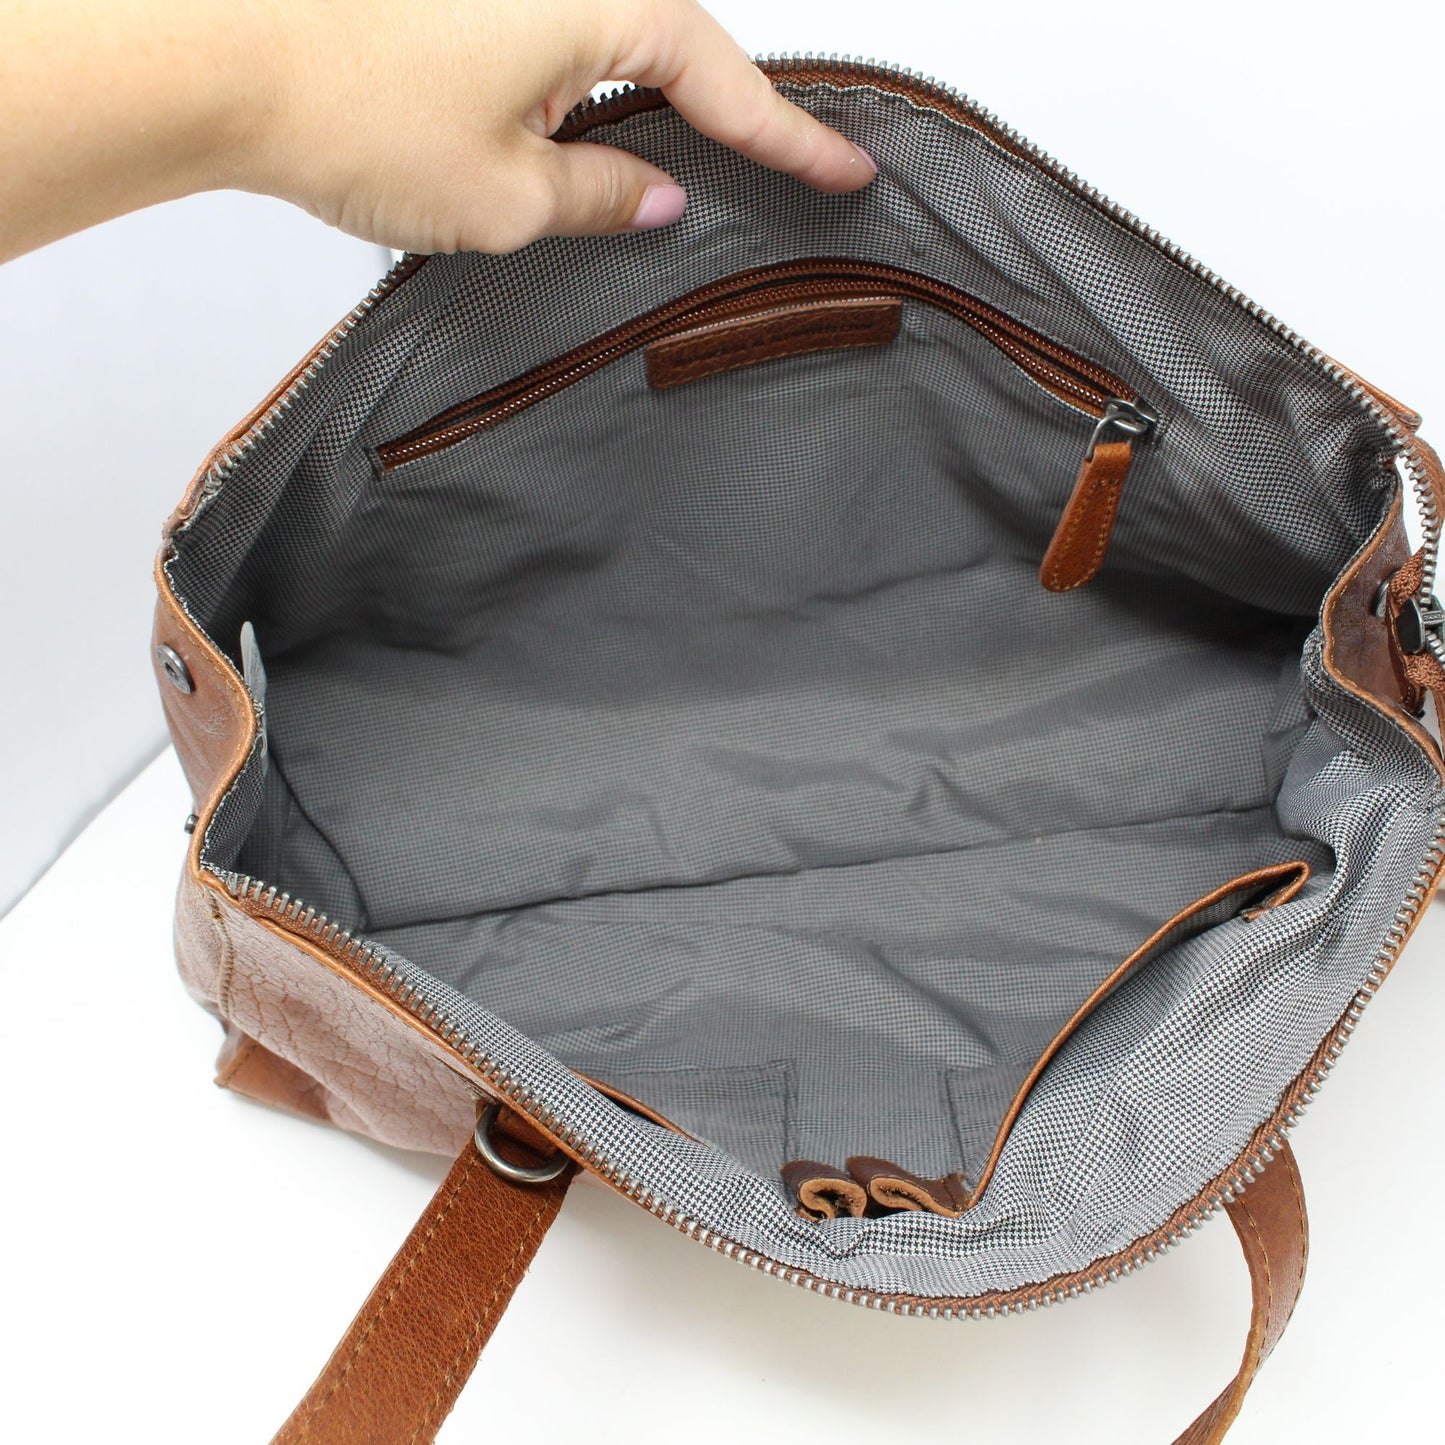 Spikes & Sparrow Leather Shopper Bag in Brandy SPK-1239